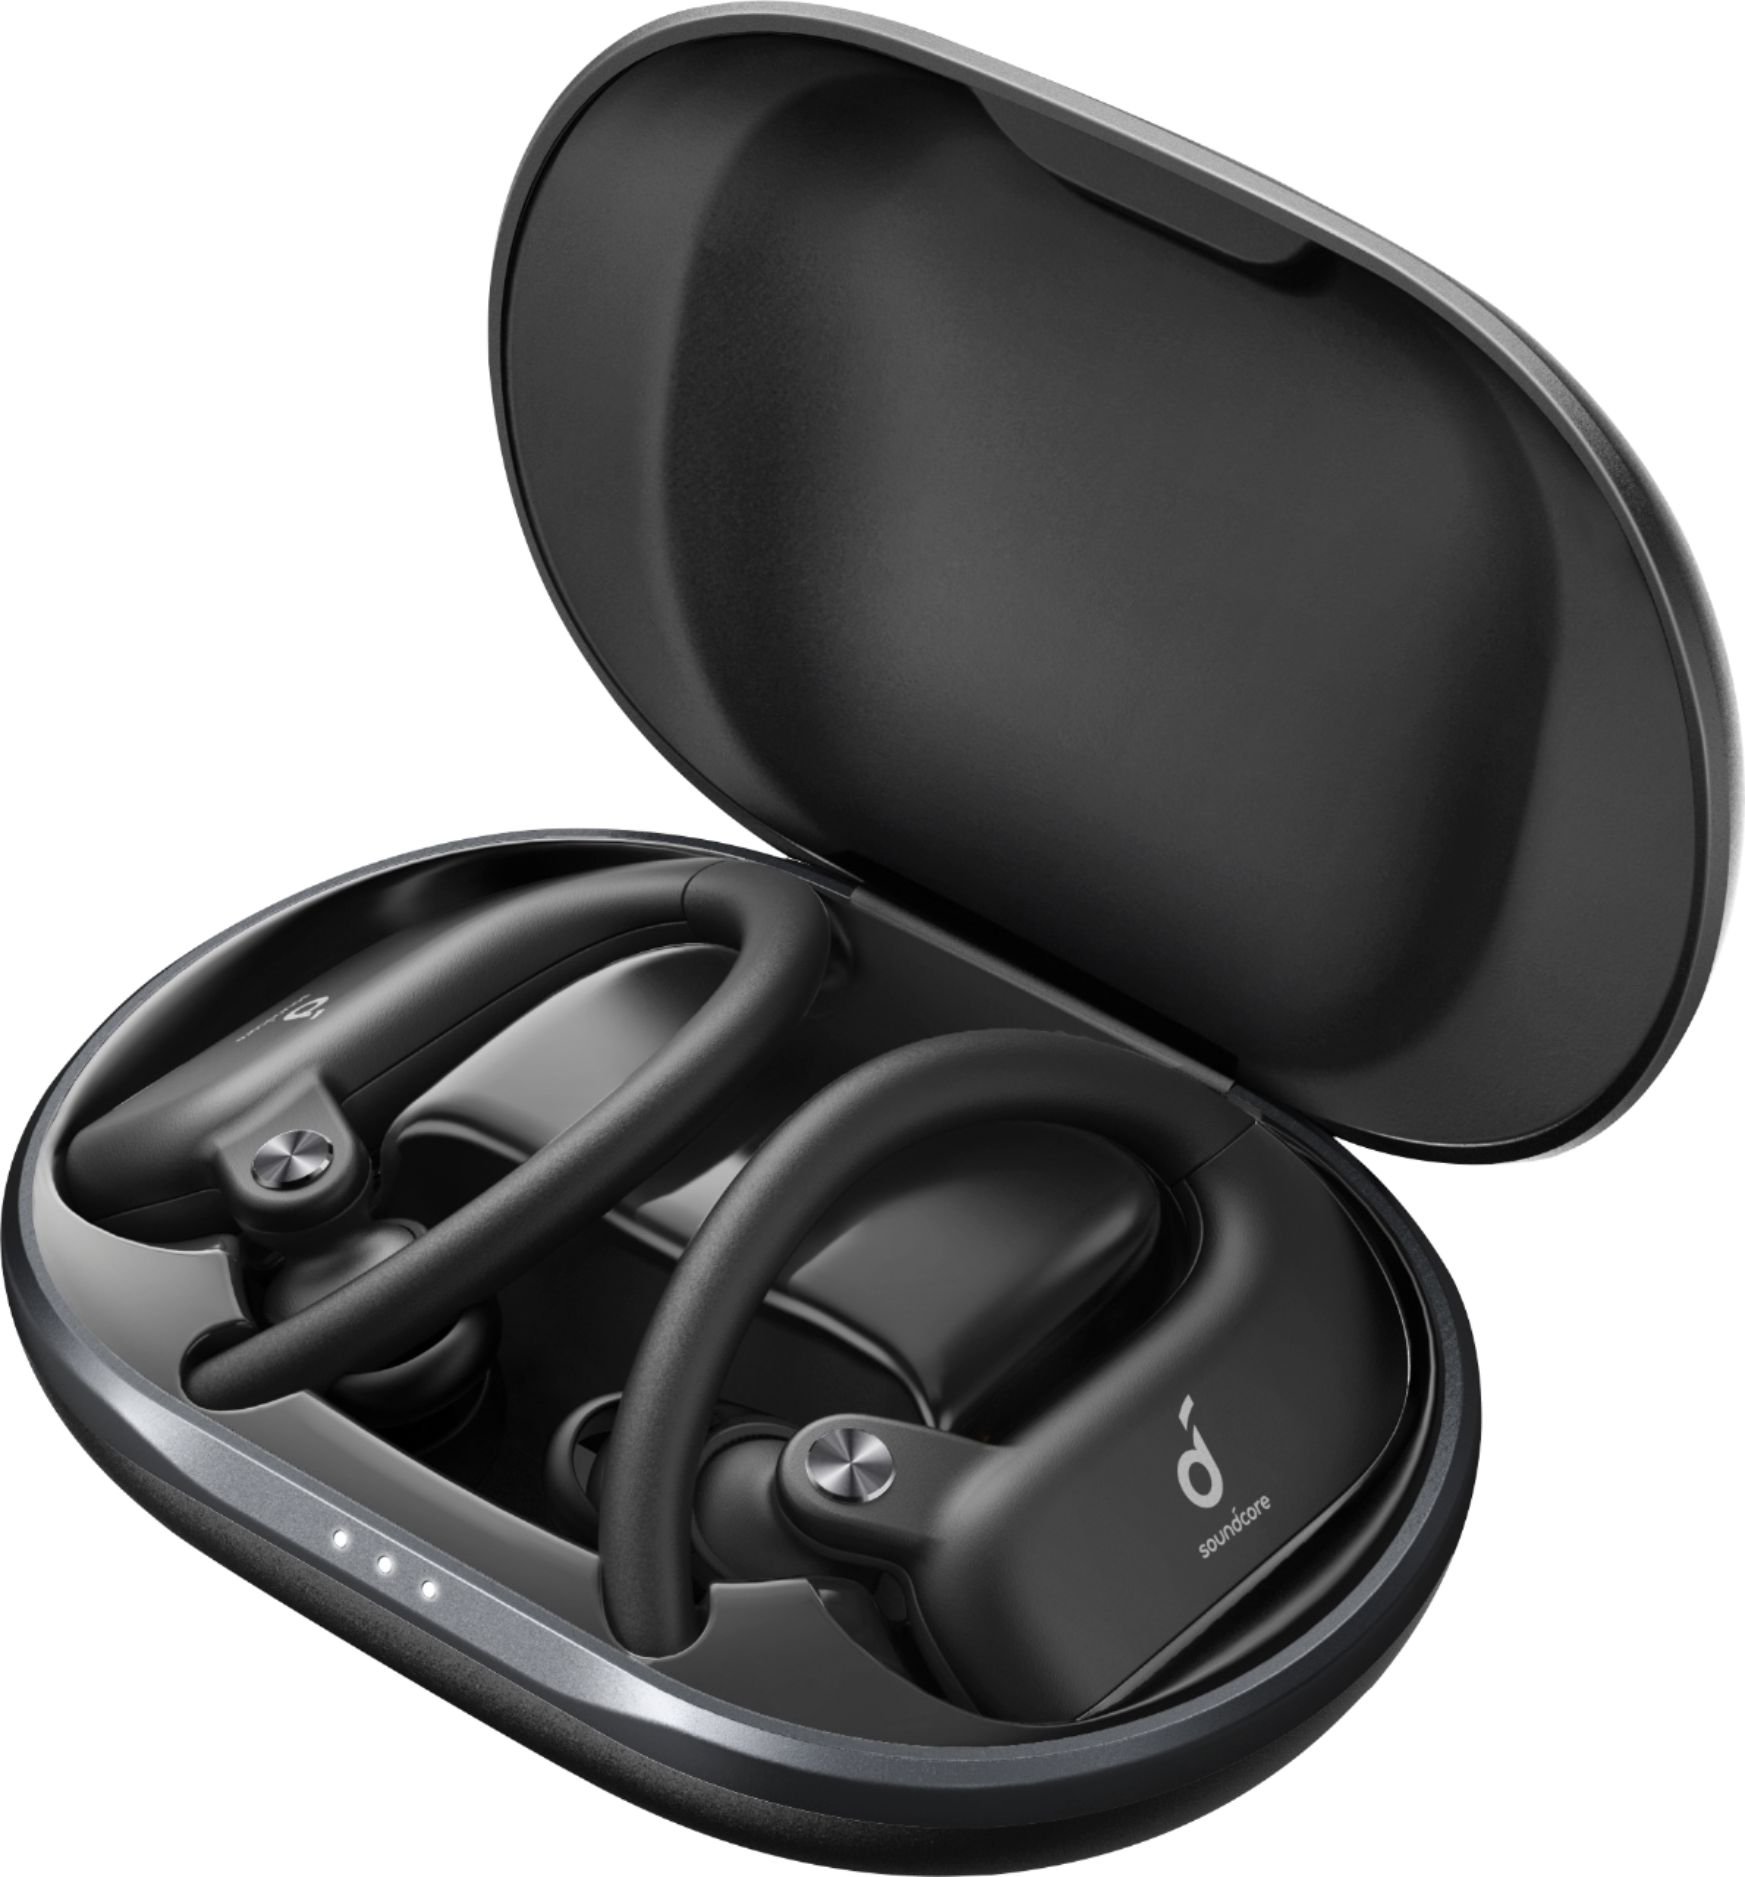 Clearance Wireless Headphones - Best Buy